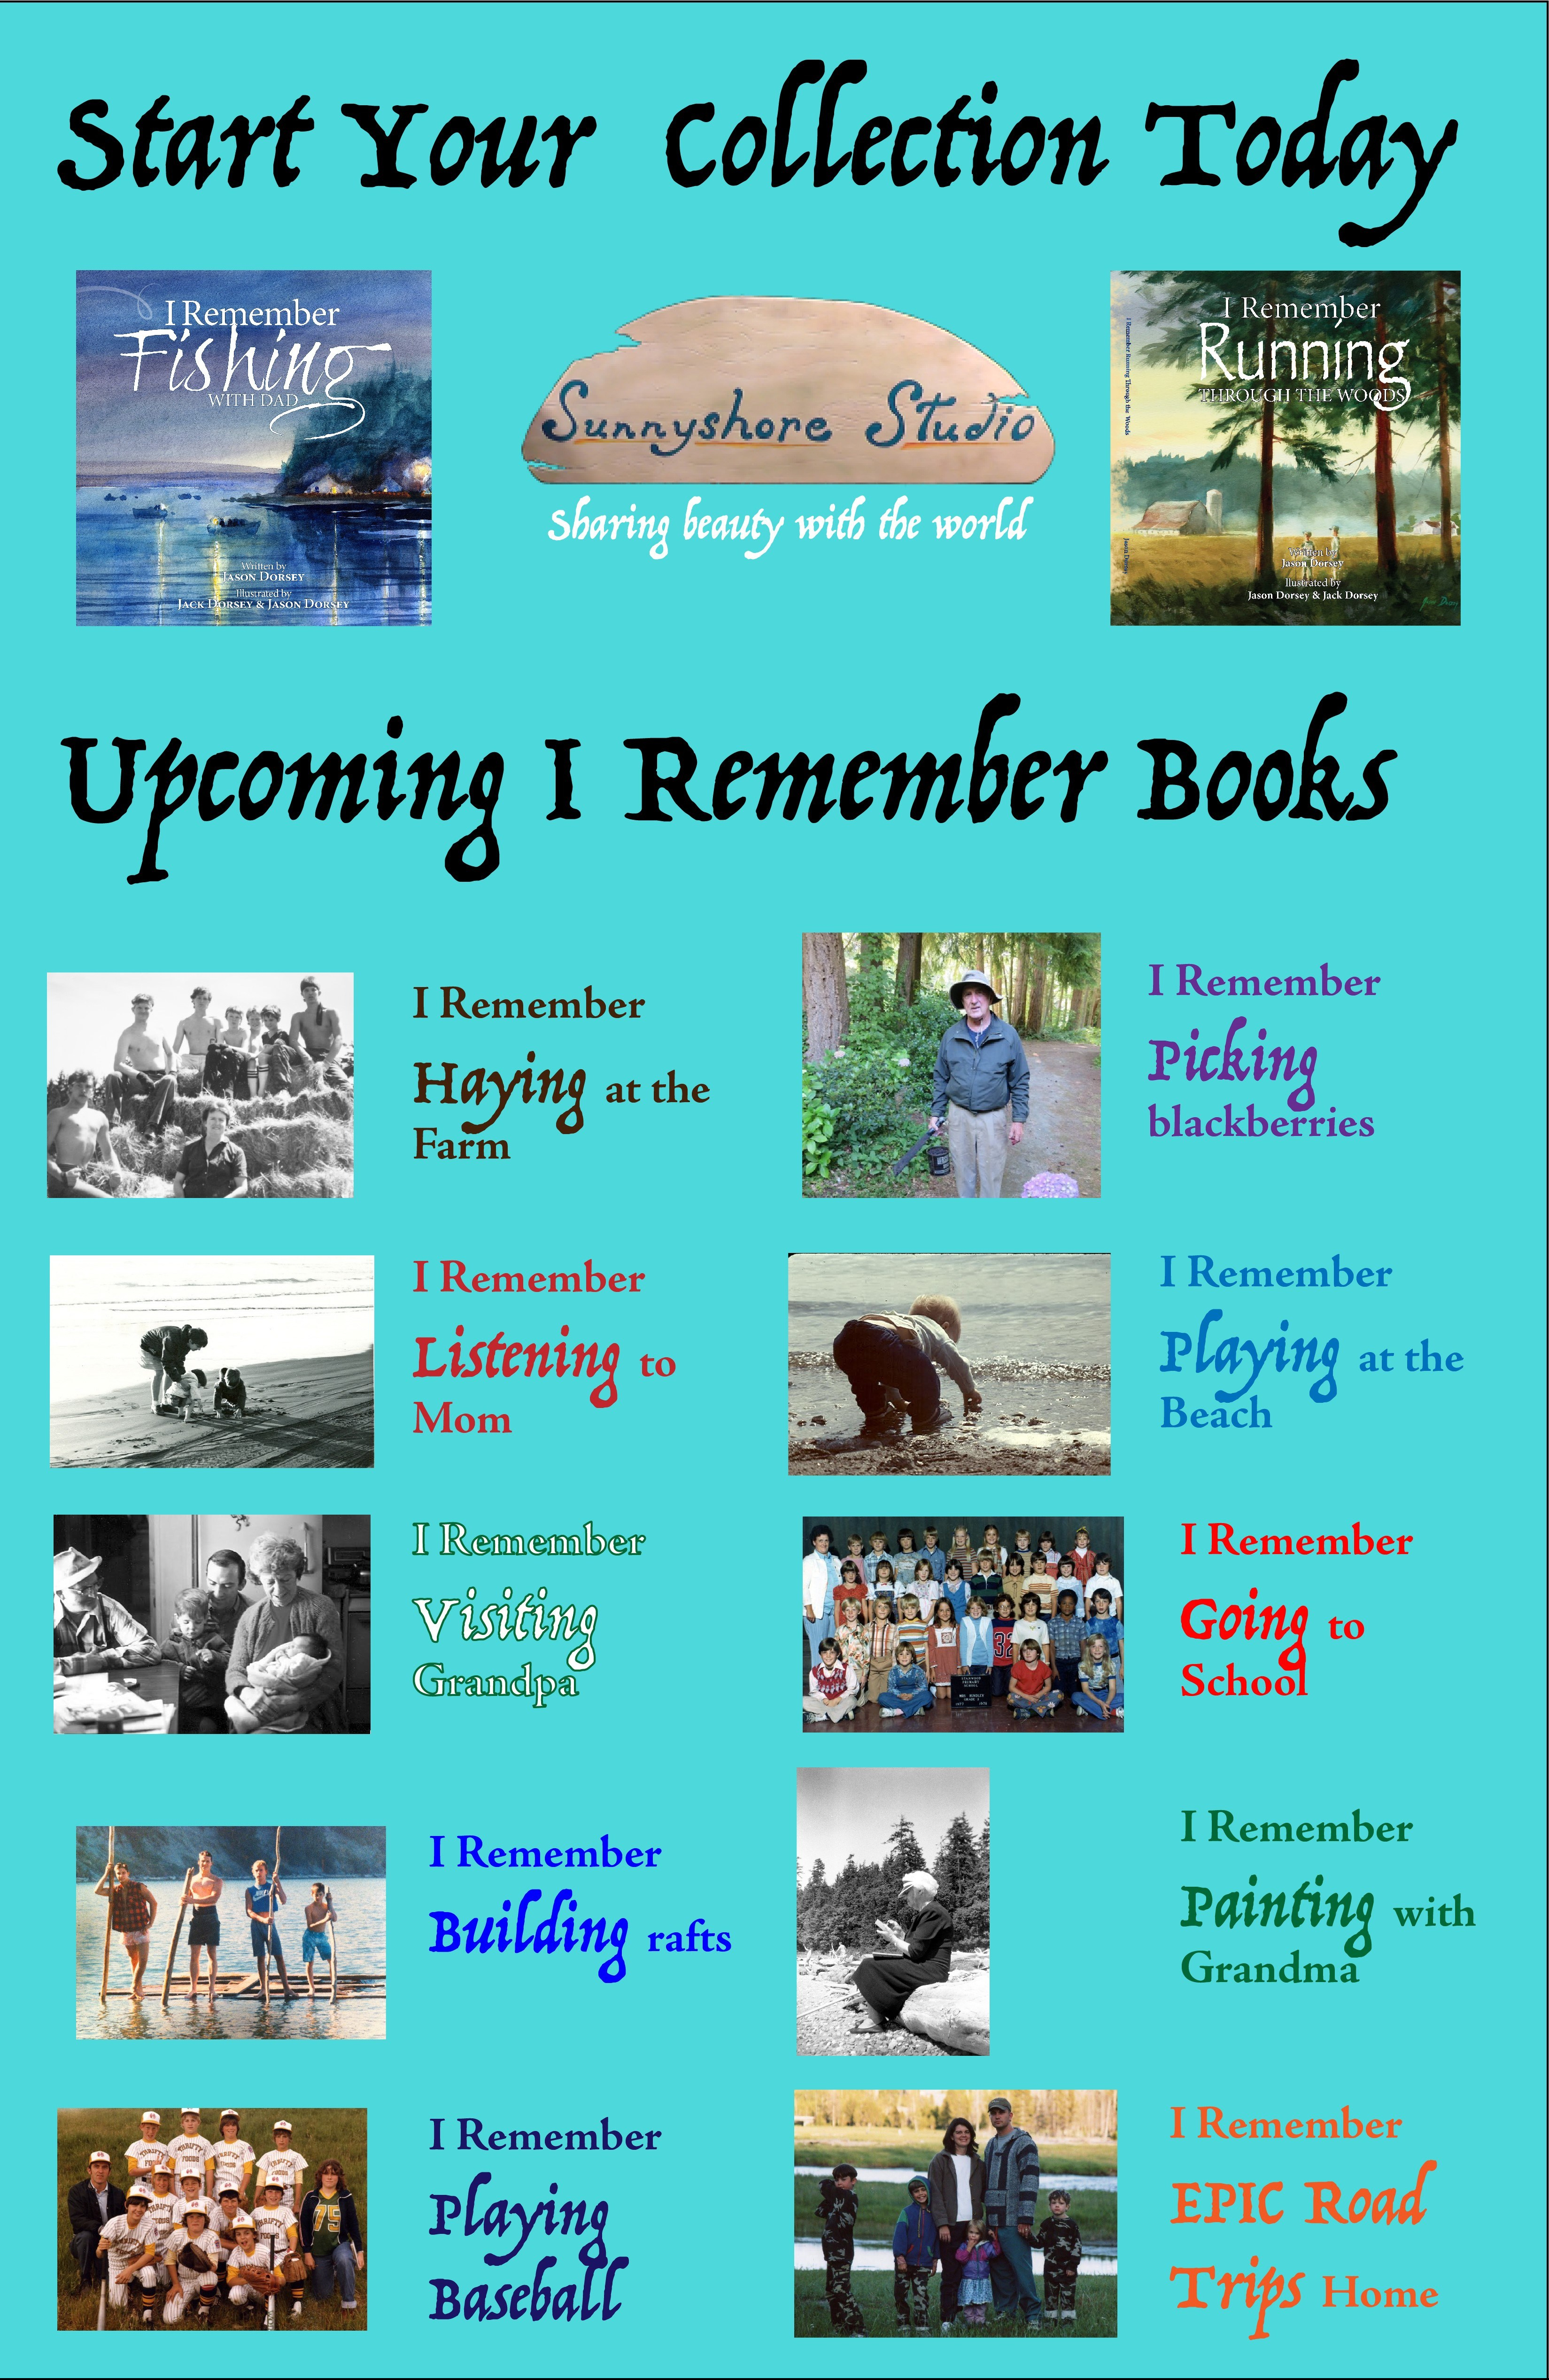 Dorsey shares plan for twelve book “I Remember” series